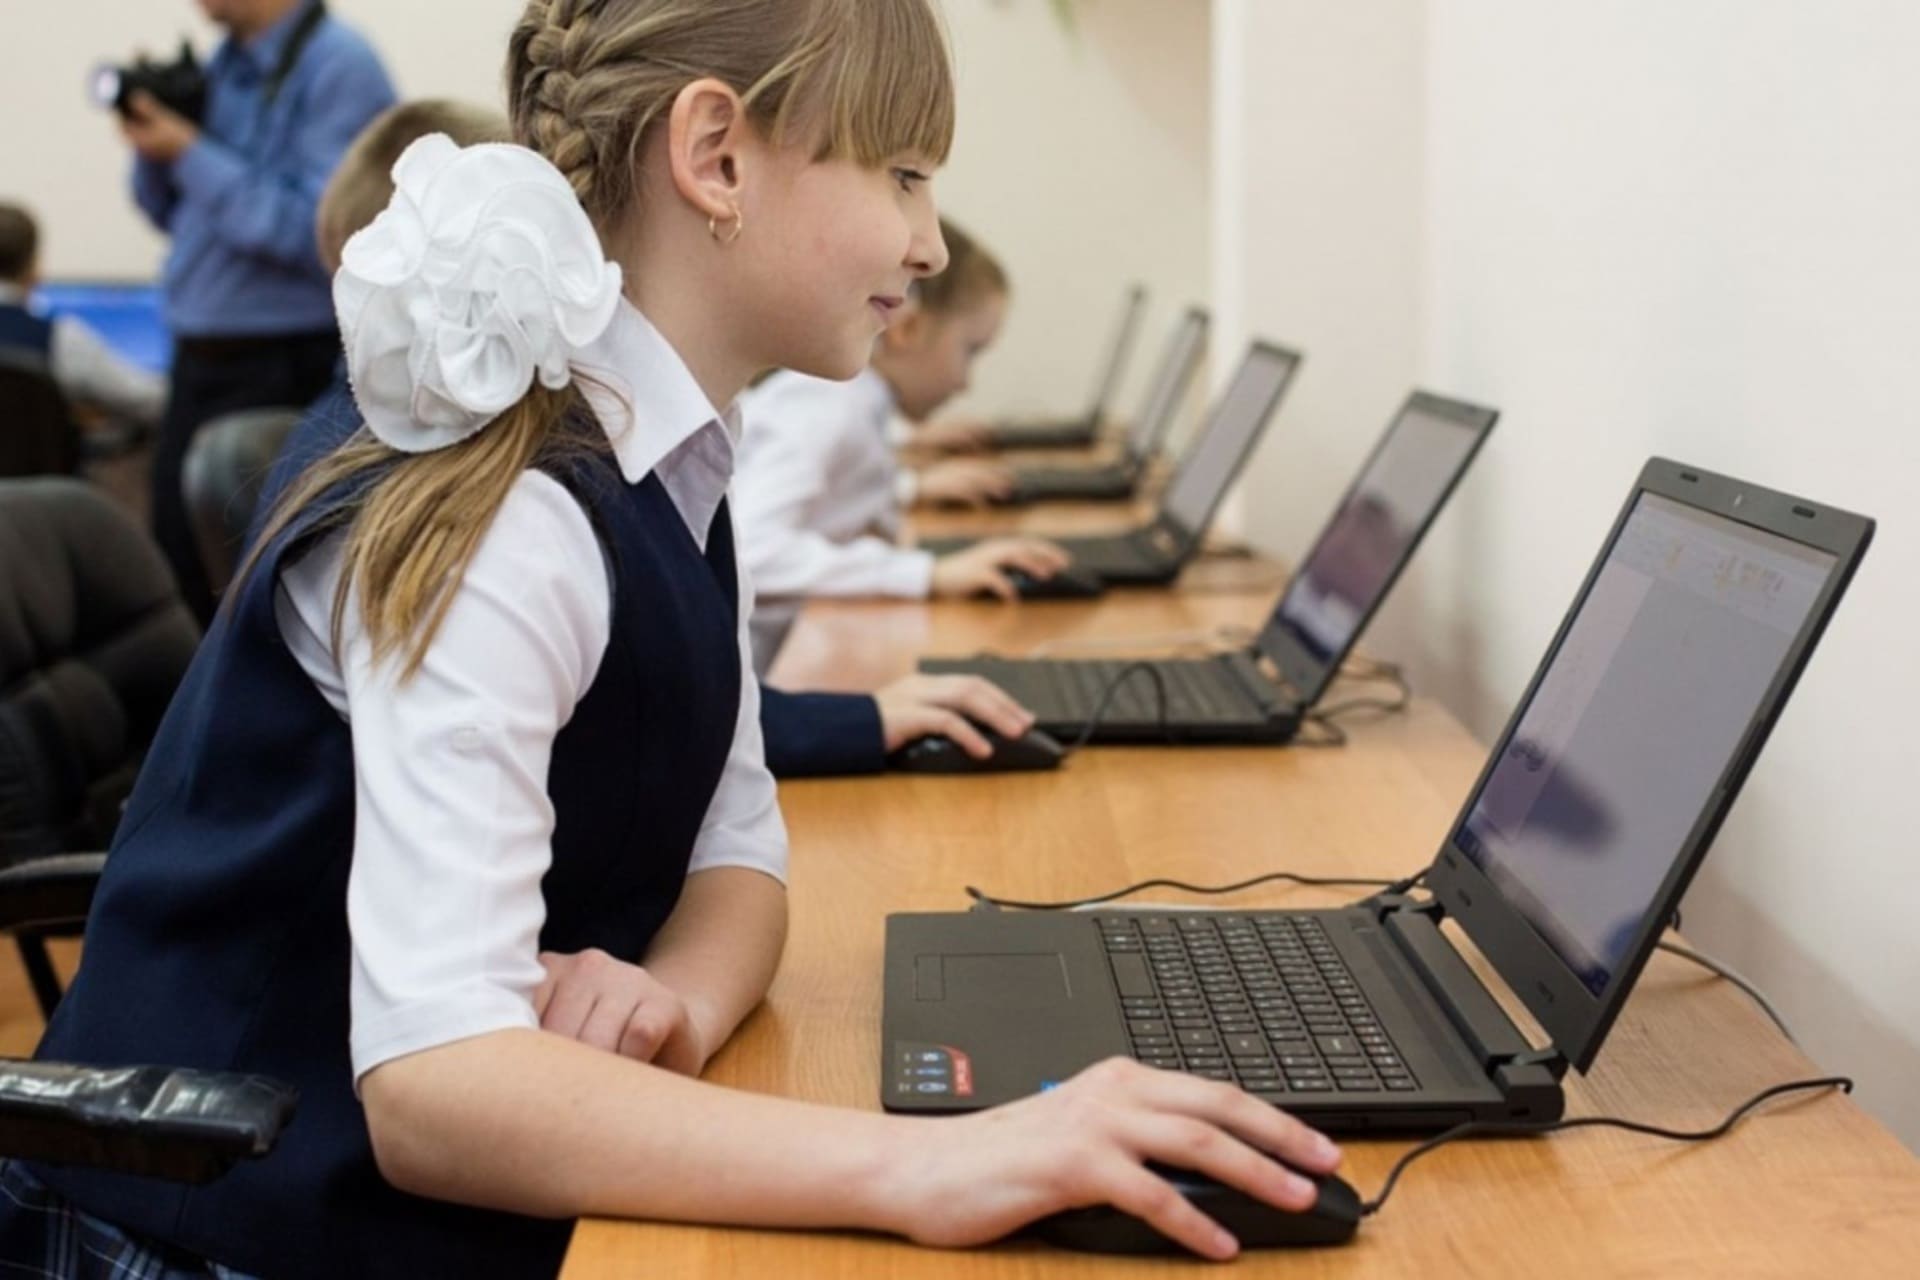 Компьютер дети школа. Компьютер в школе. Ученик за компьютером. Компьютерный класс в школе. Дети за компьютером в школе.